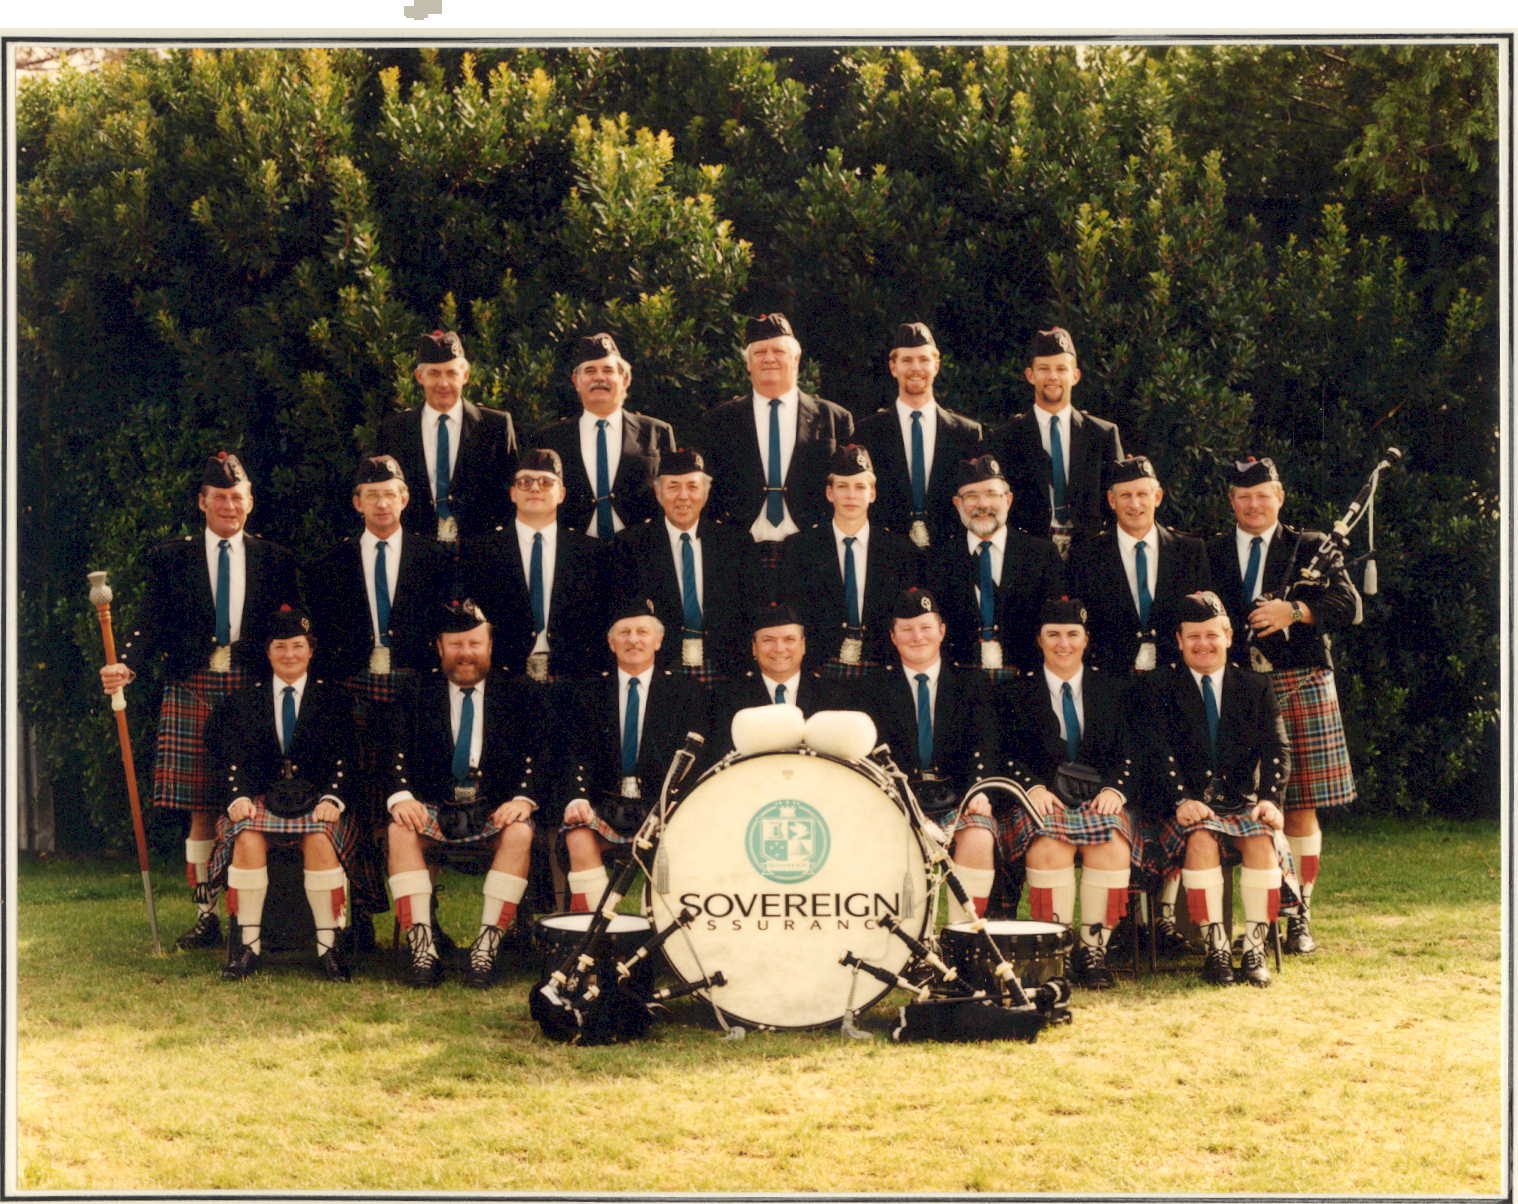 The 1995 New Zealand Chamopinship Band members.